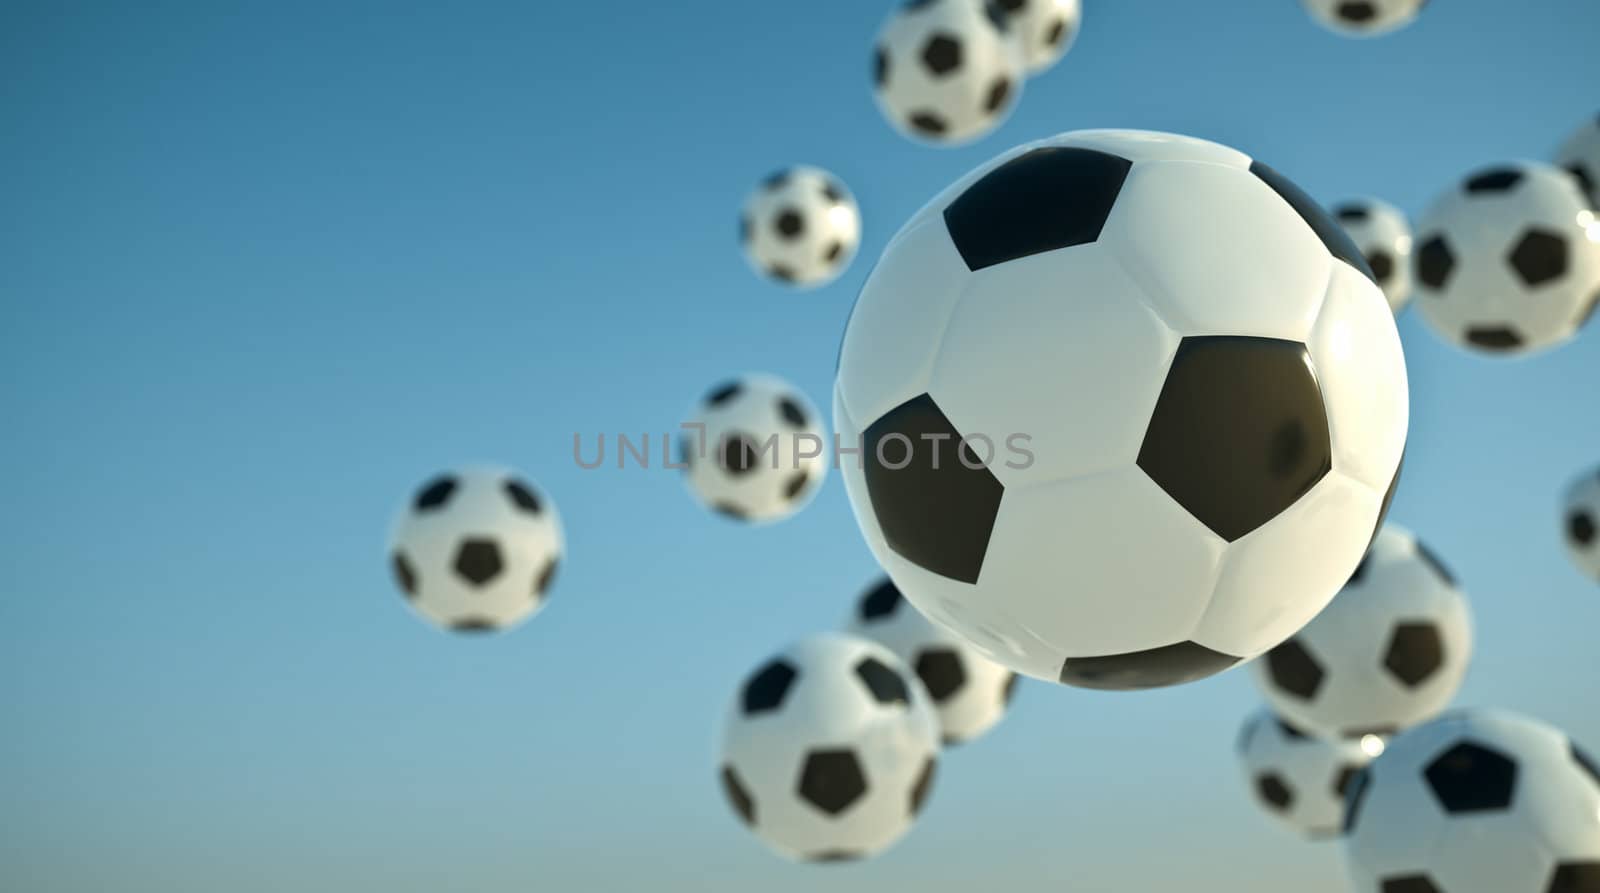 Soccer balls in the sky. 3D render.